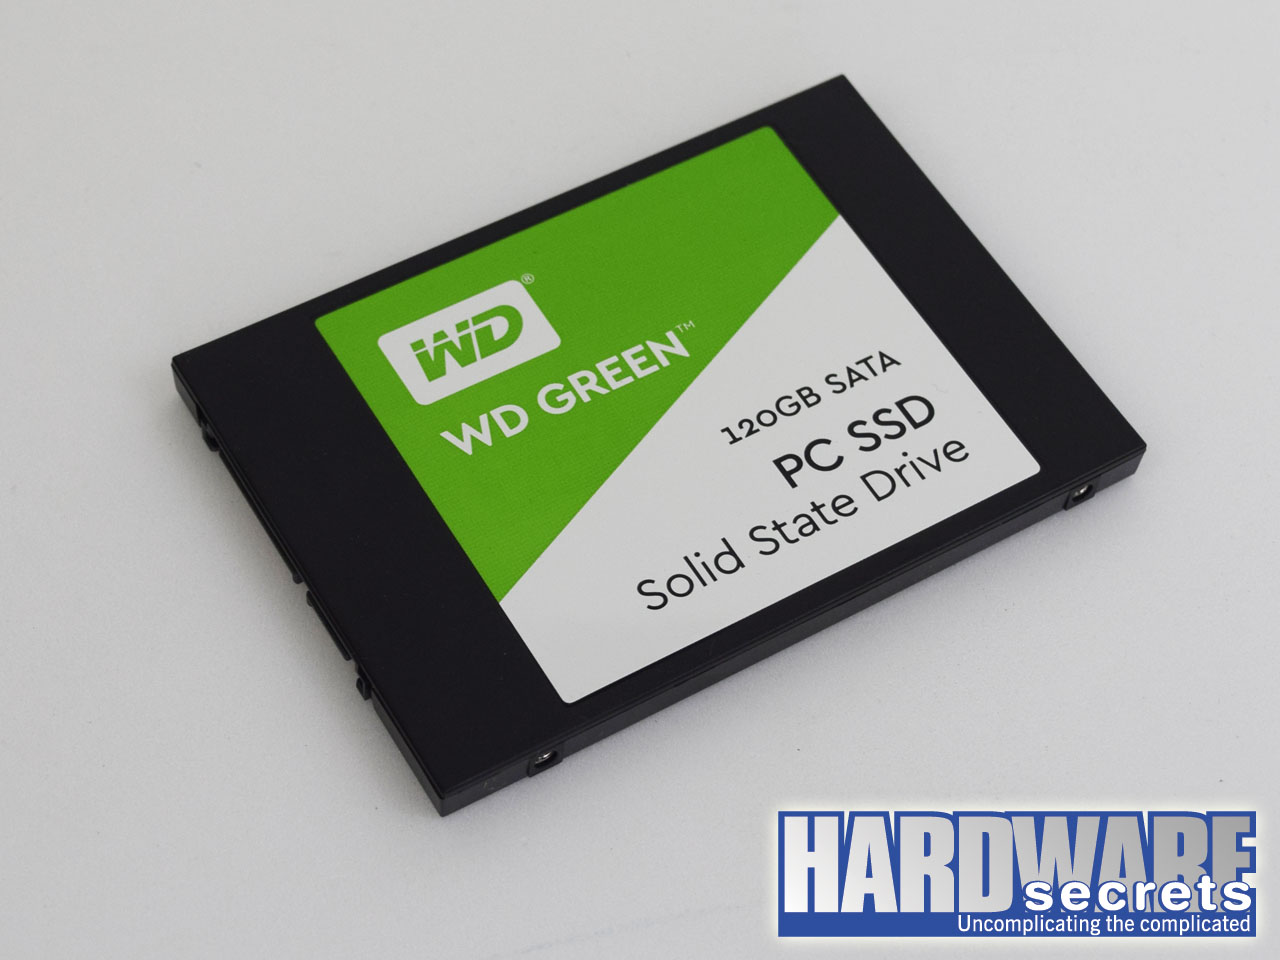 WD Green 120 GiB SSD